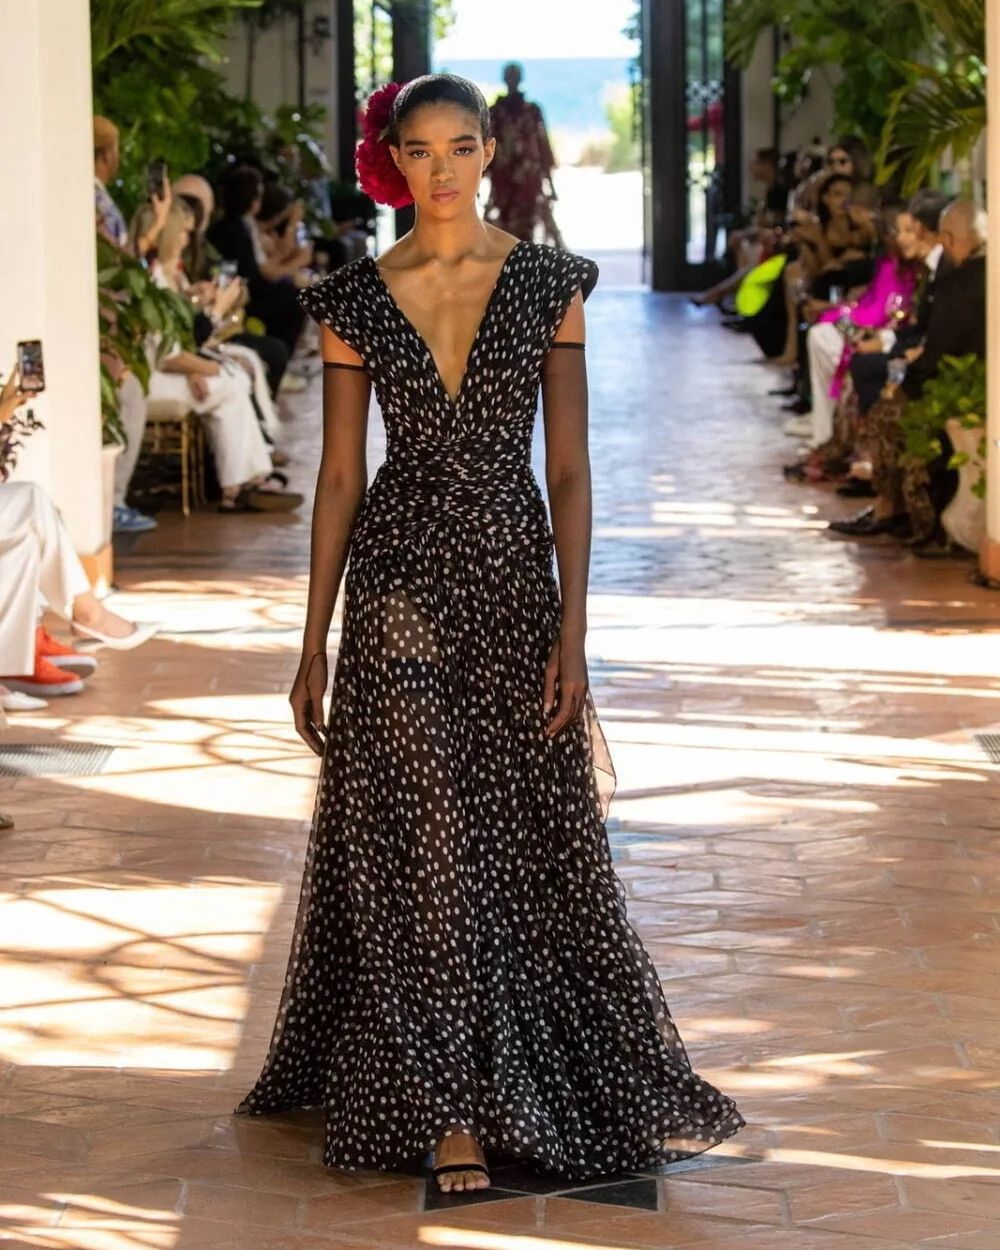 Suknia projektu Dolce & Gabbana
Instagram/majorversace